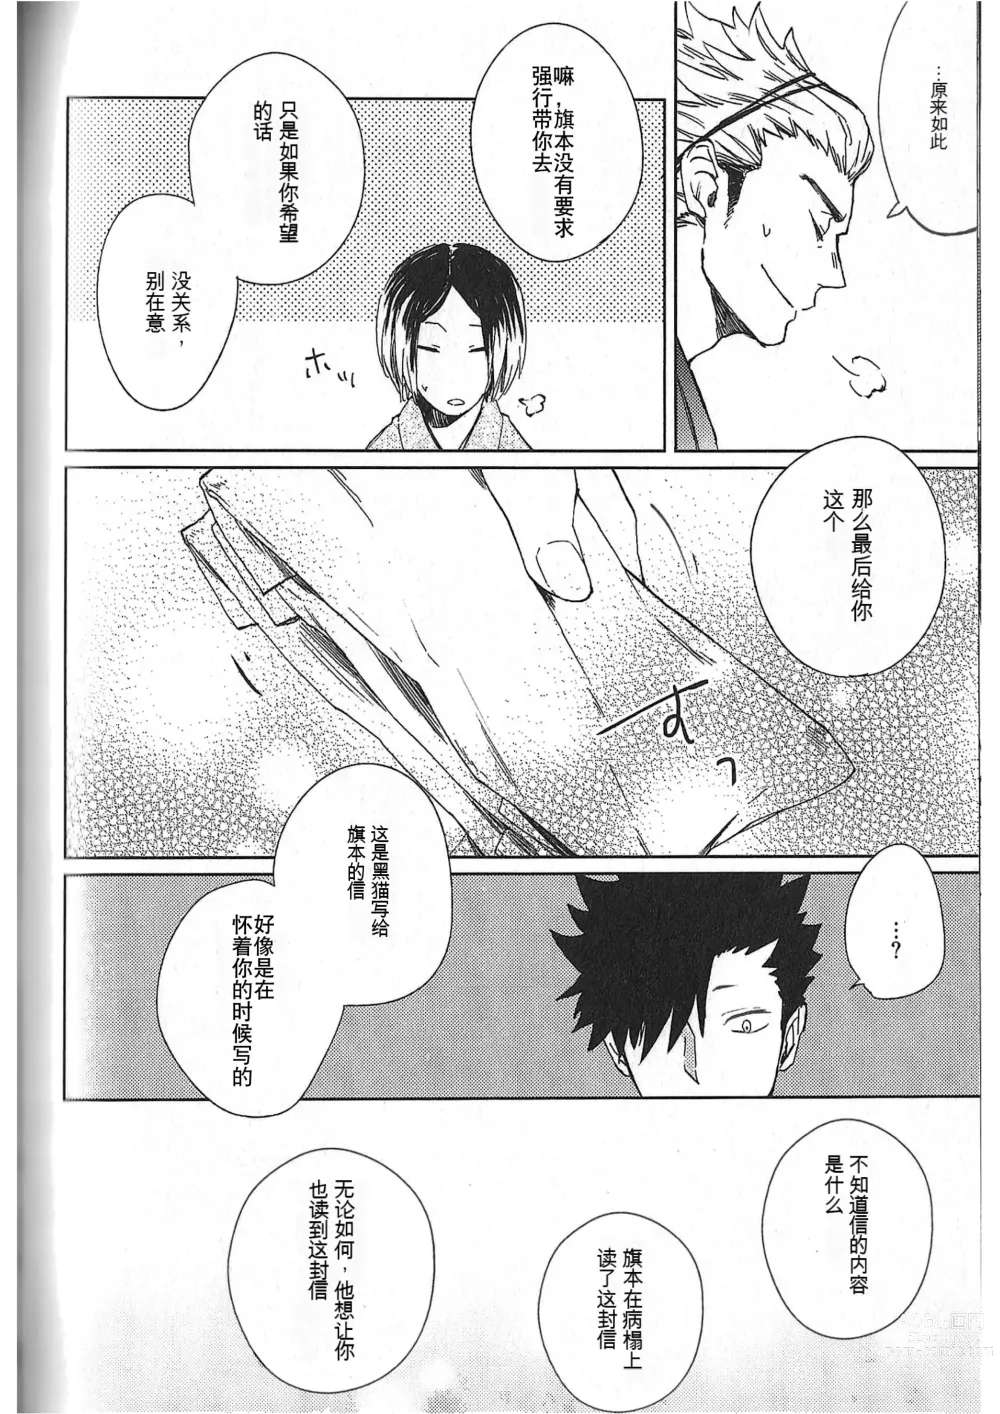 Page 31 of doujinshi 破晓之枭后篇